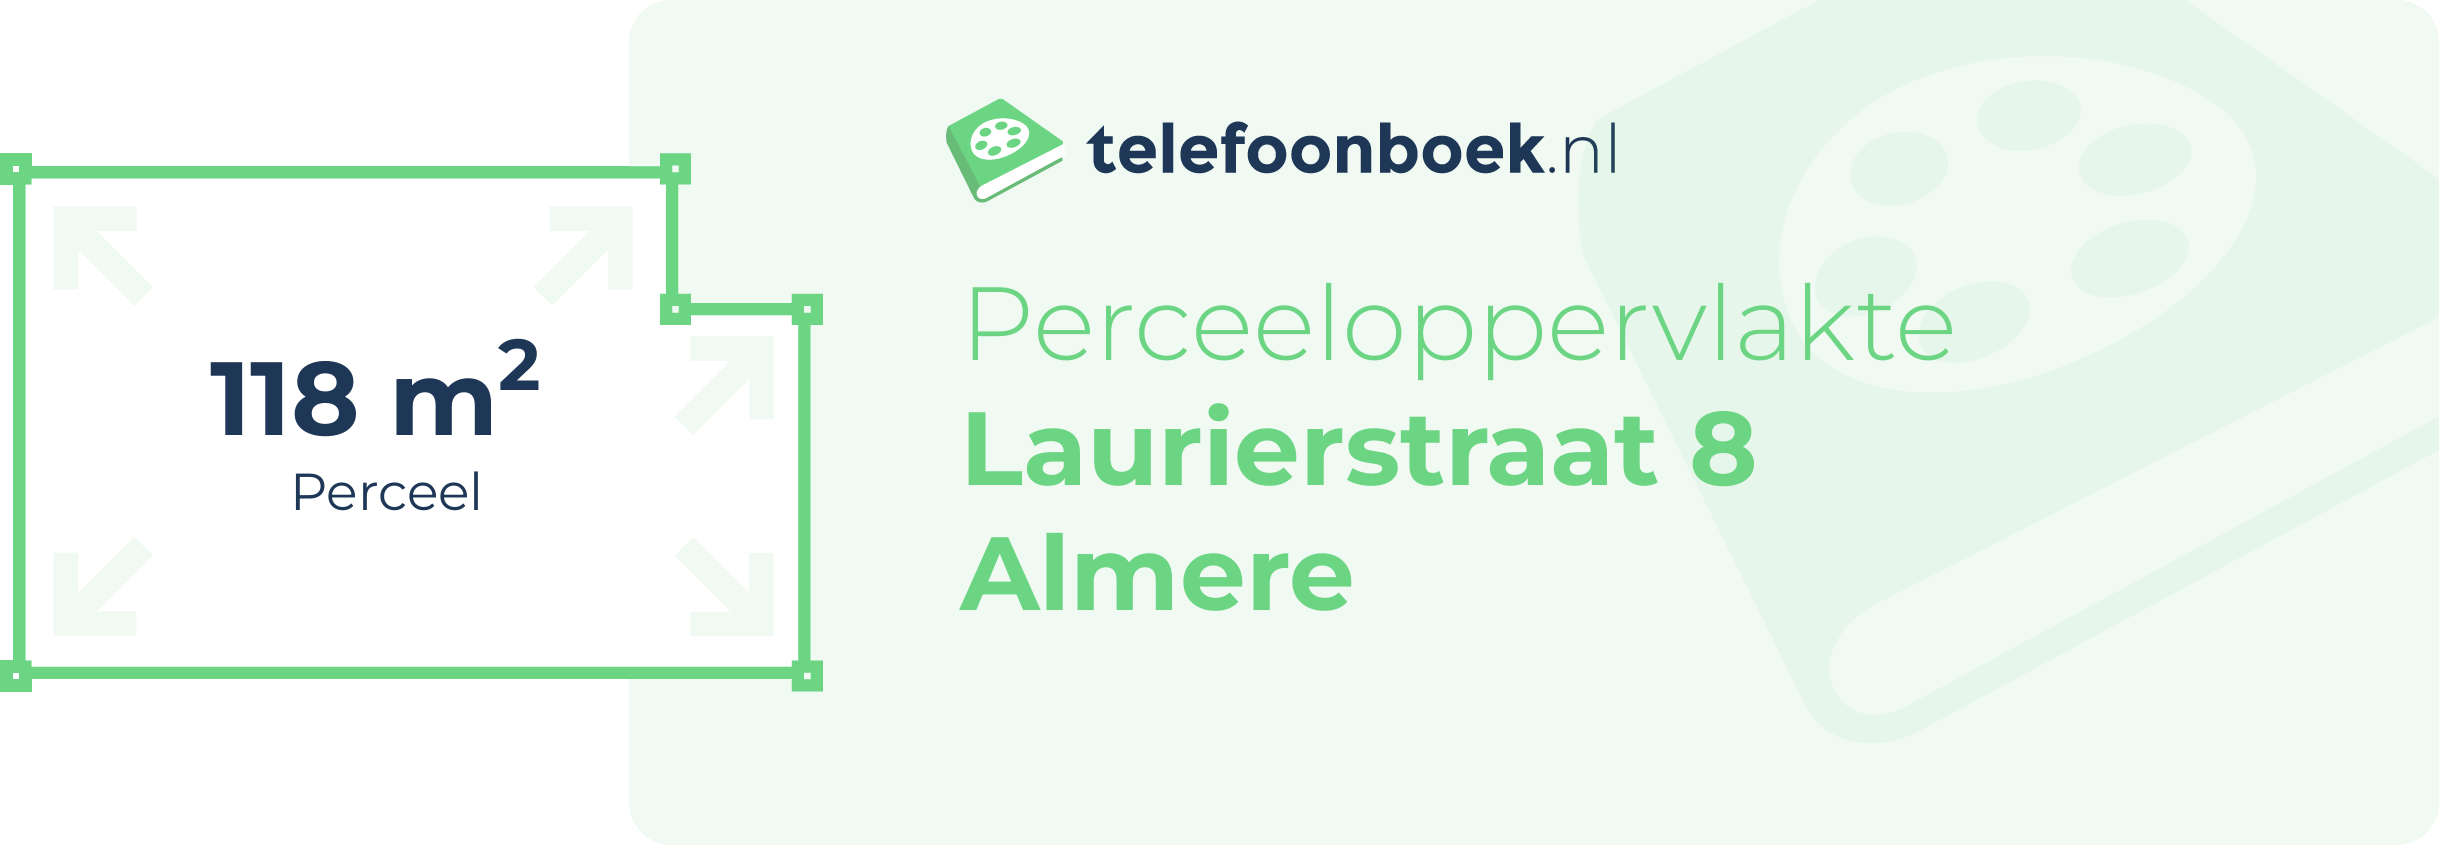 Perceeloppervlakte Laurierstraat 8 Almere